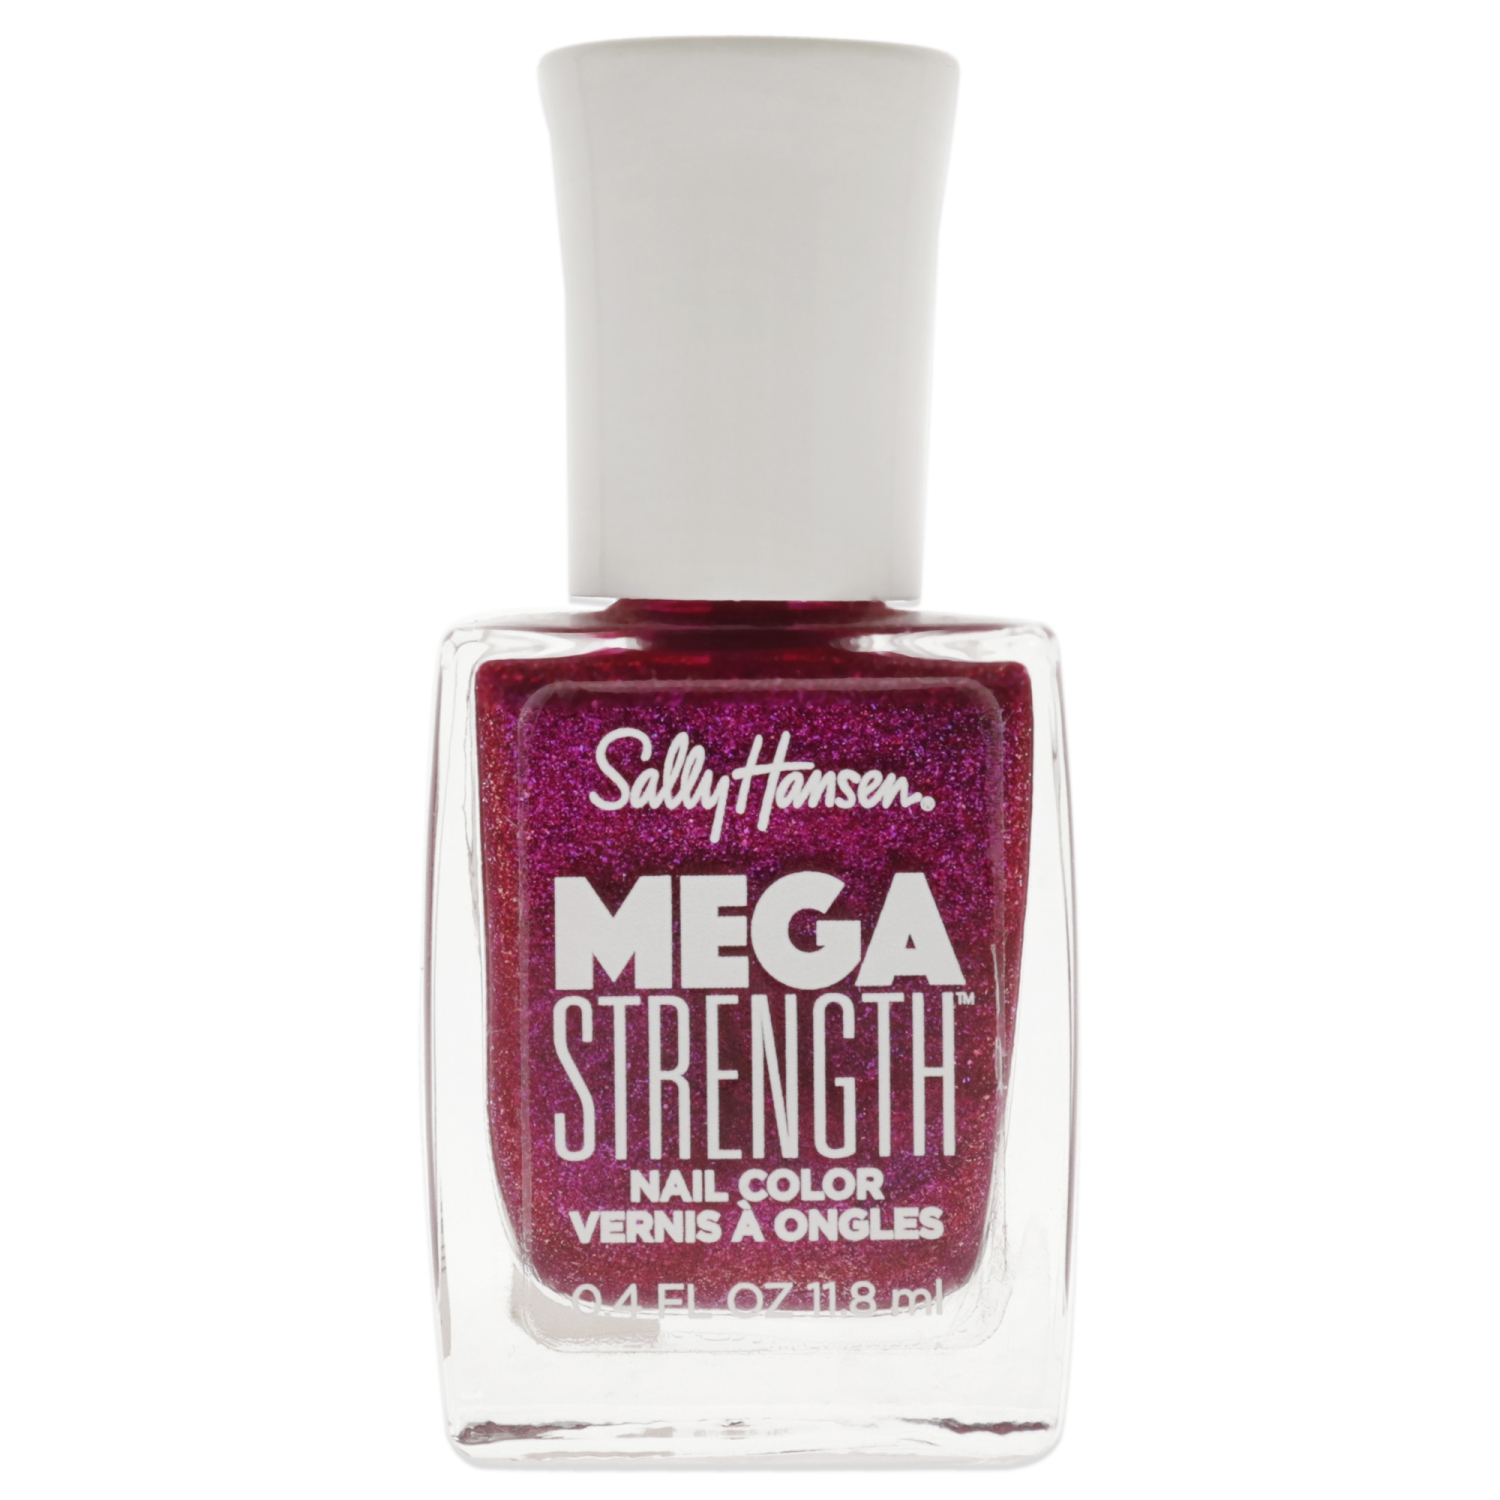 Mega Strength Nail Color - 048 Sorry Not Sorry by Sally Hansen for Women - 0.4 oz Nail Polish